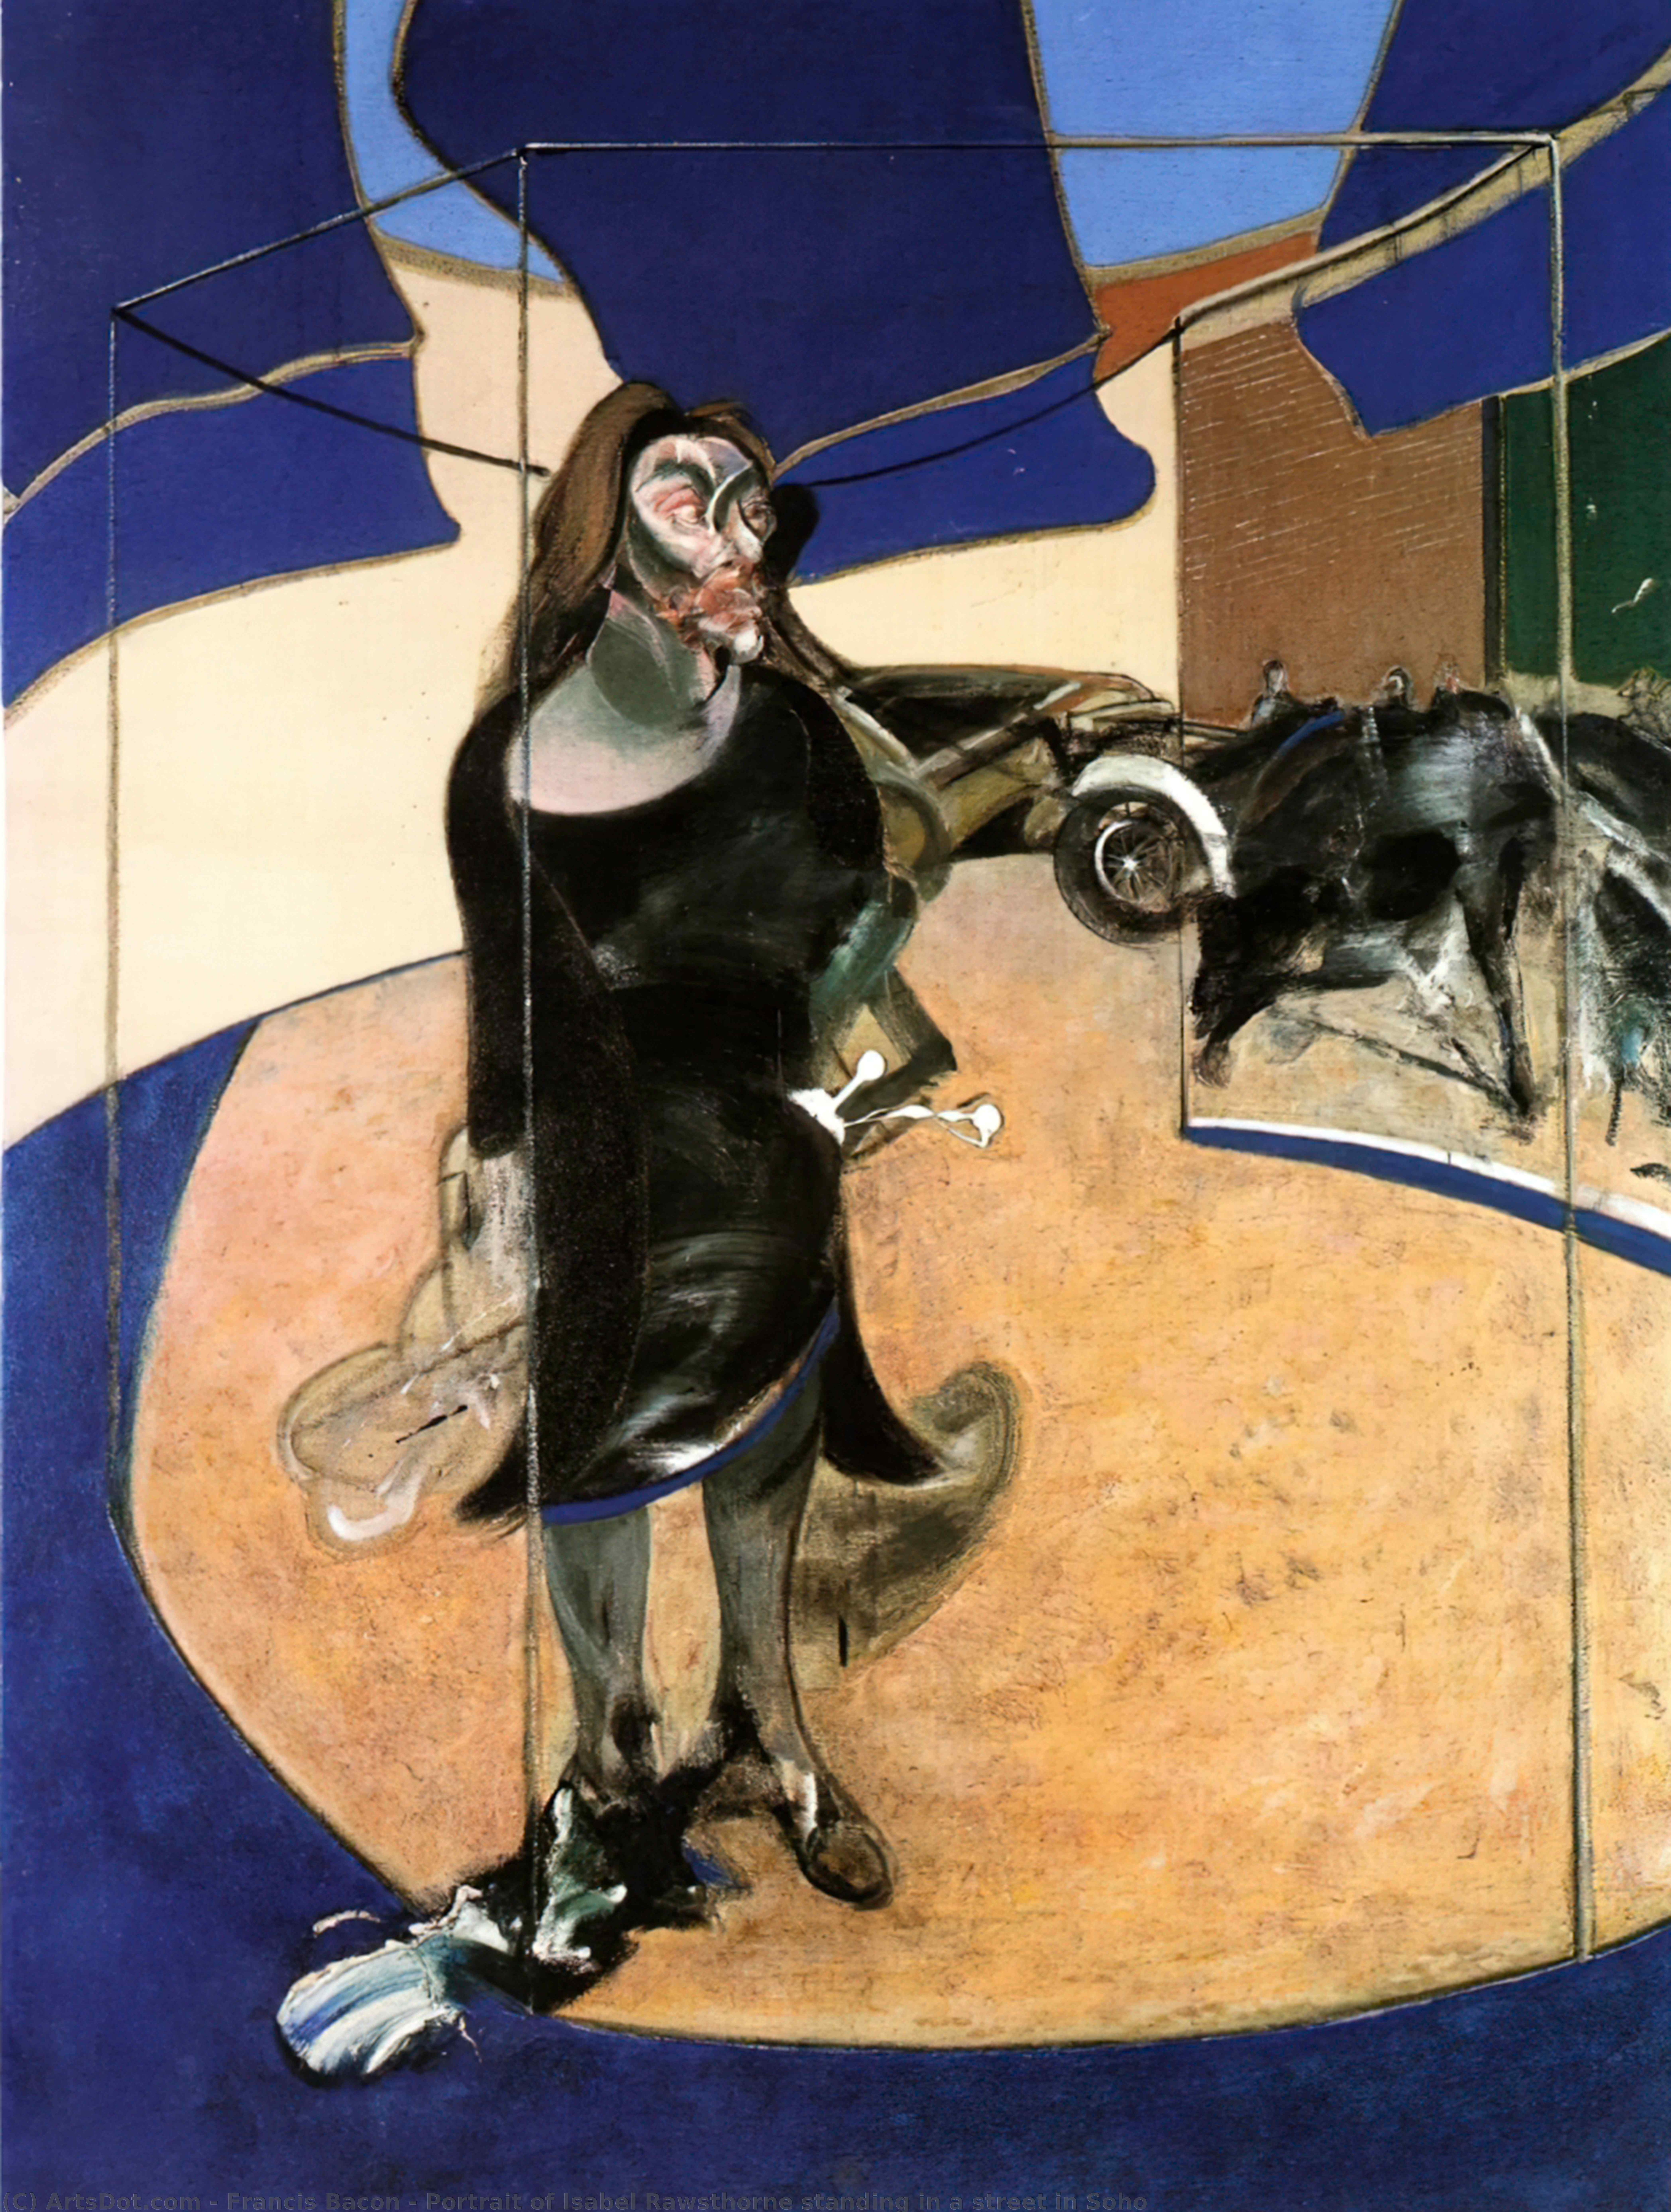 Wikoo.org - موسوعة الفنون الجميلة - اللوحة، العمل الفني Francis Bacon - Portrait of Isabel Rawsthorne standing in a street in Soho